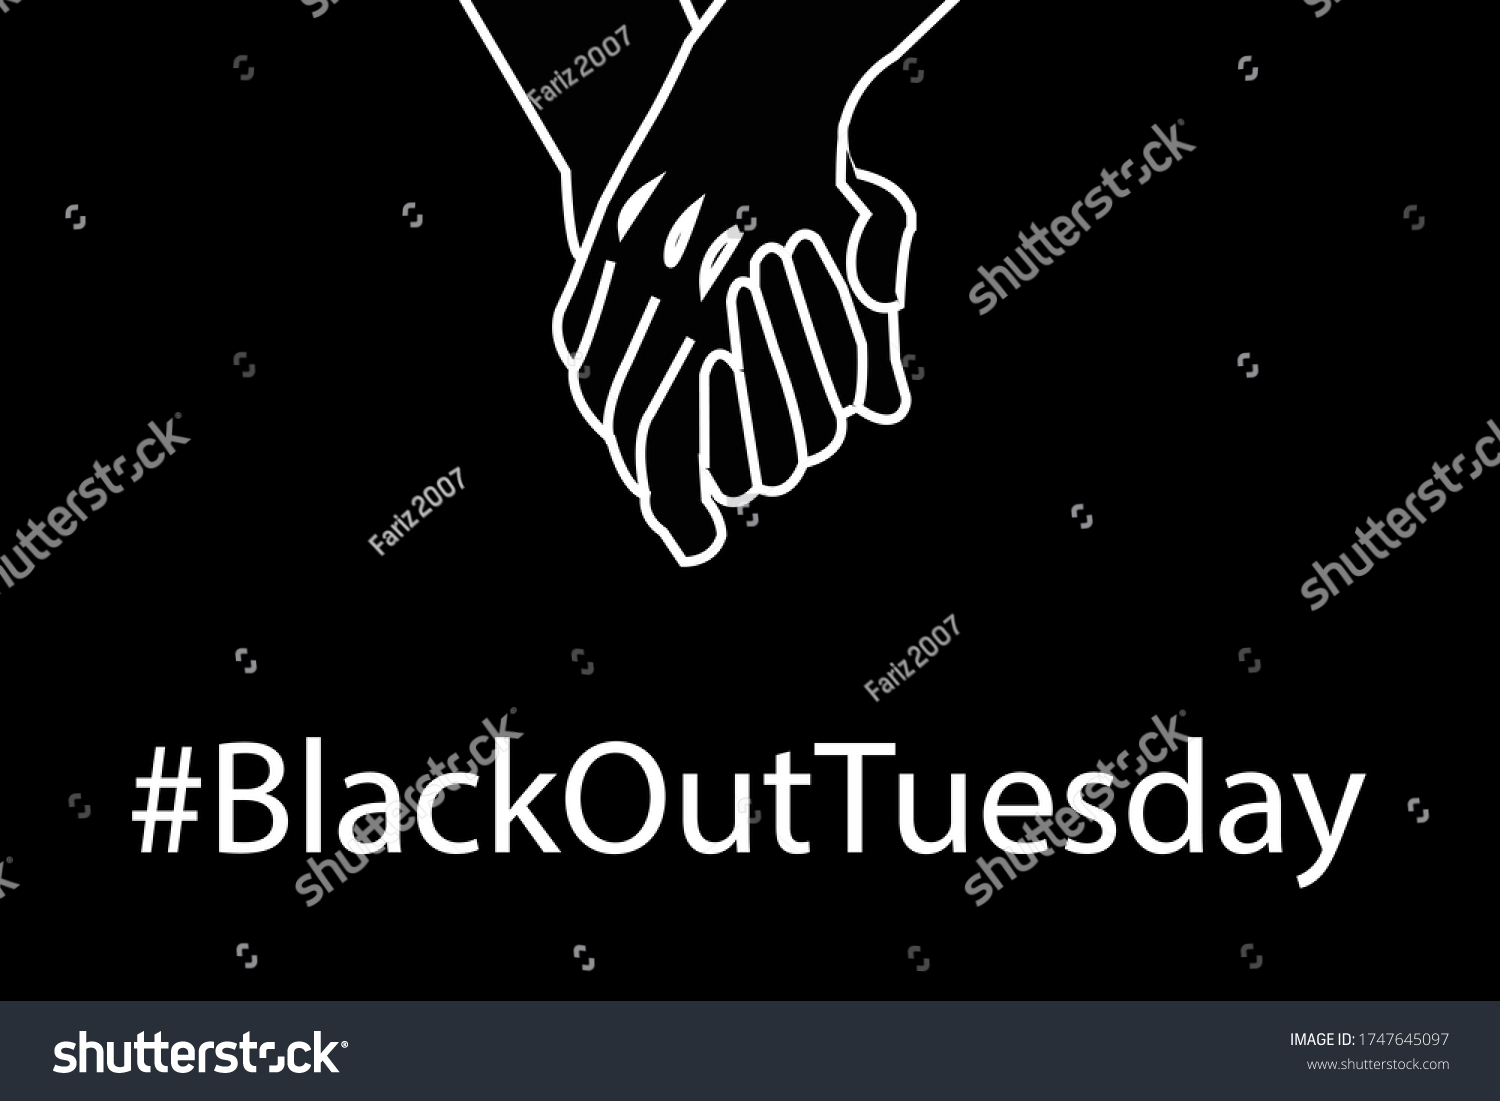 Blackout tuesday inscription on a black background. Black lives matter, blackout tuesday 2020 concept. #1747645097